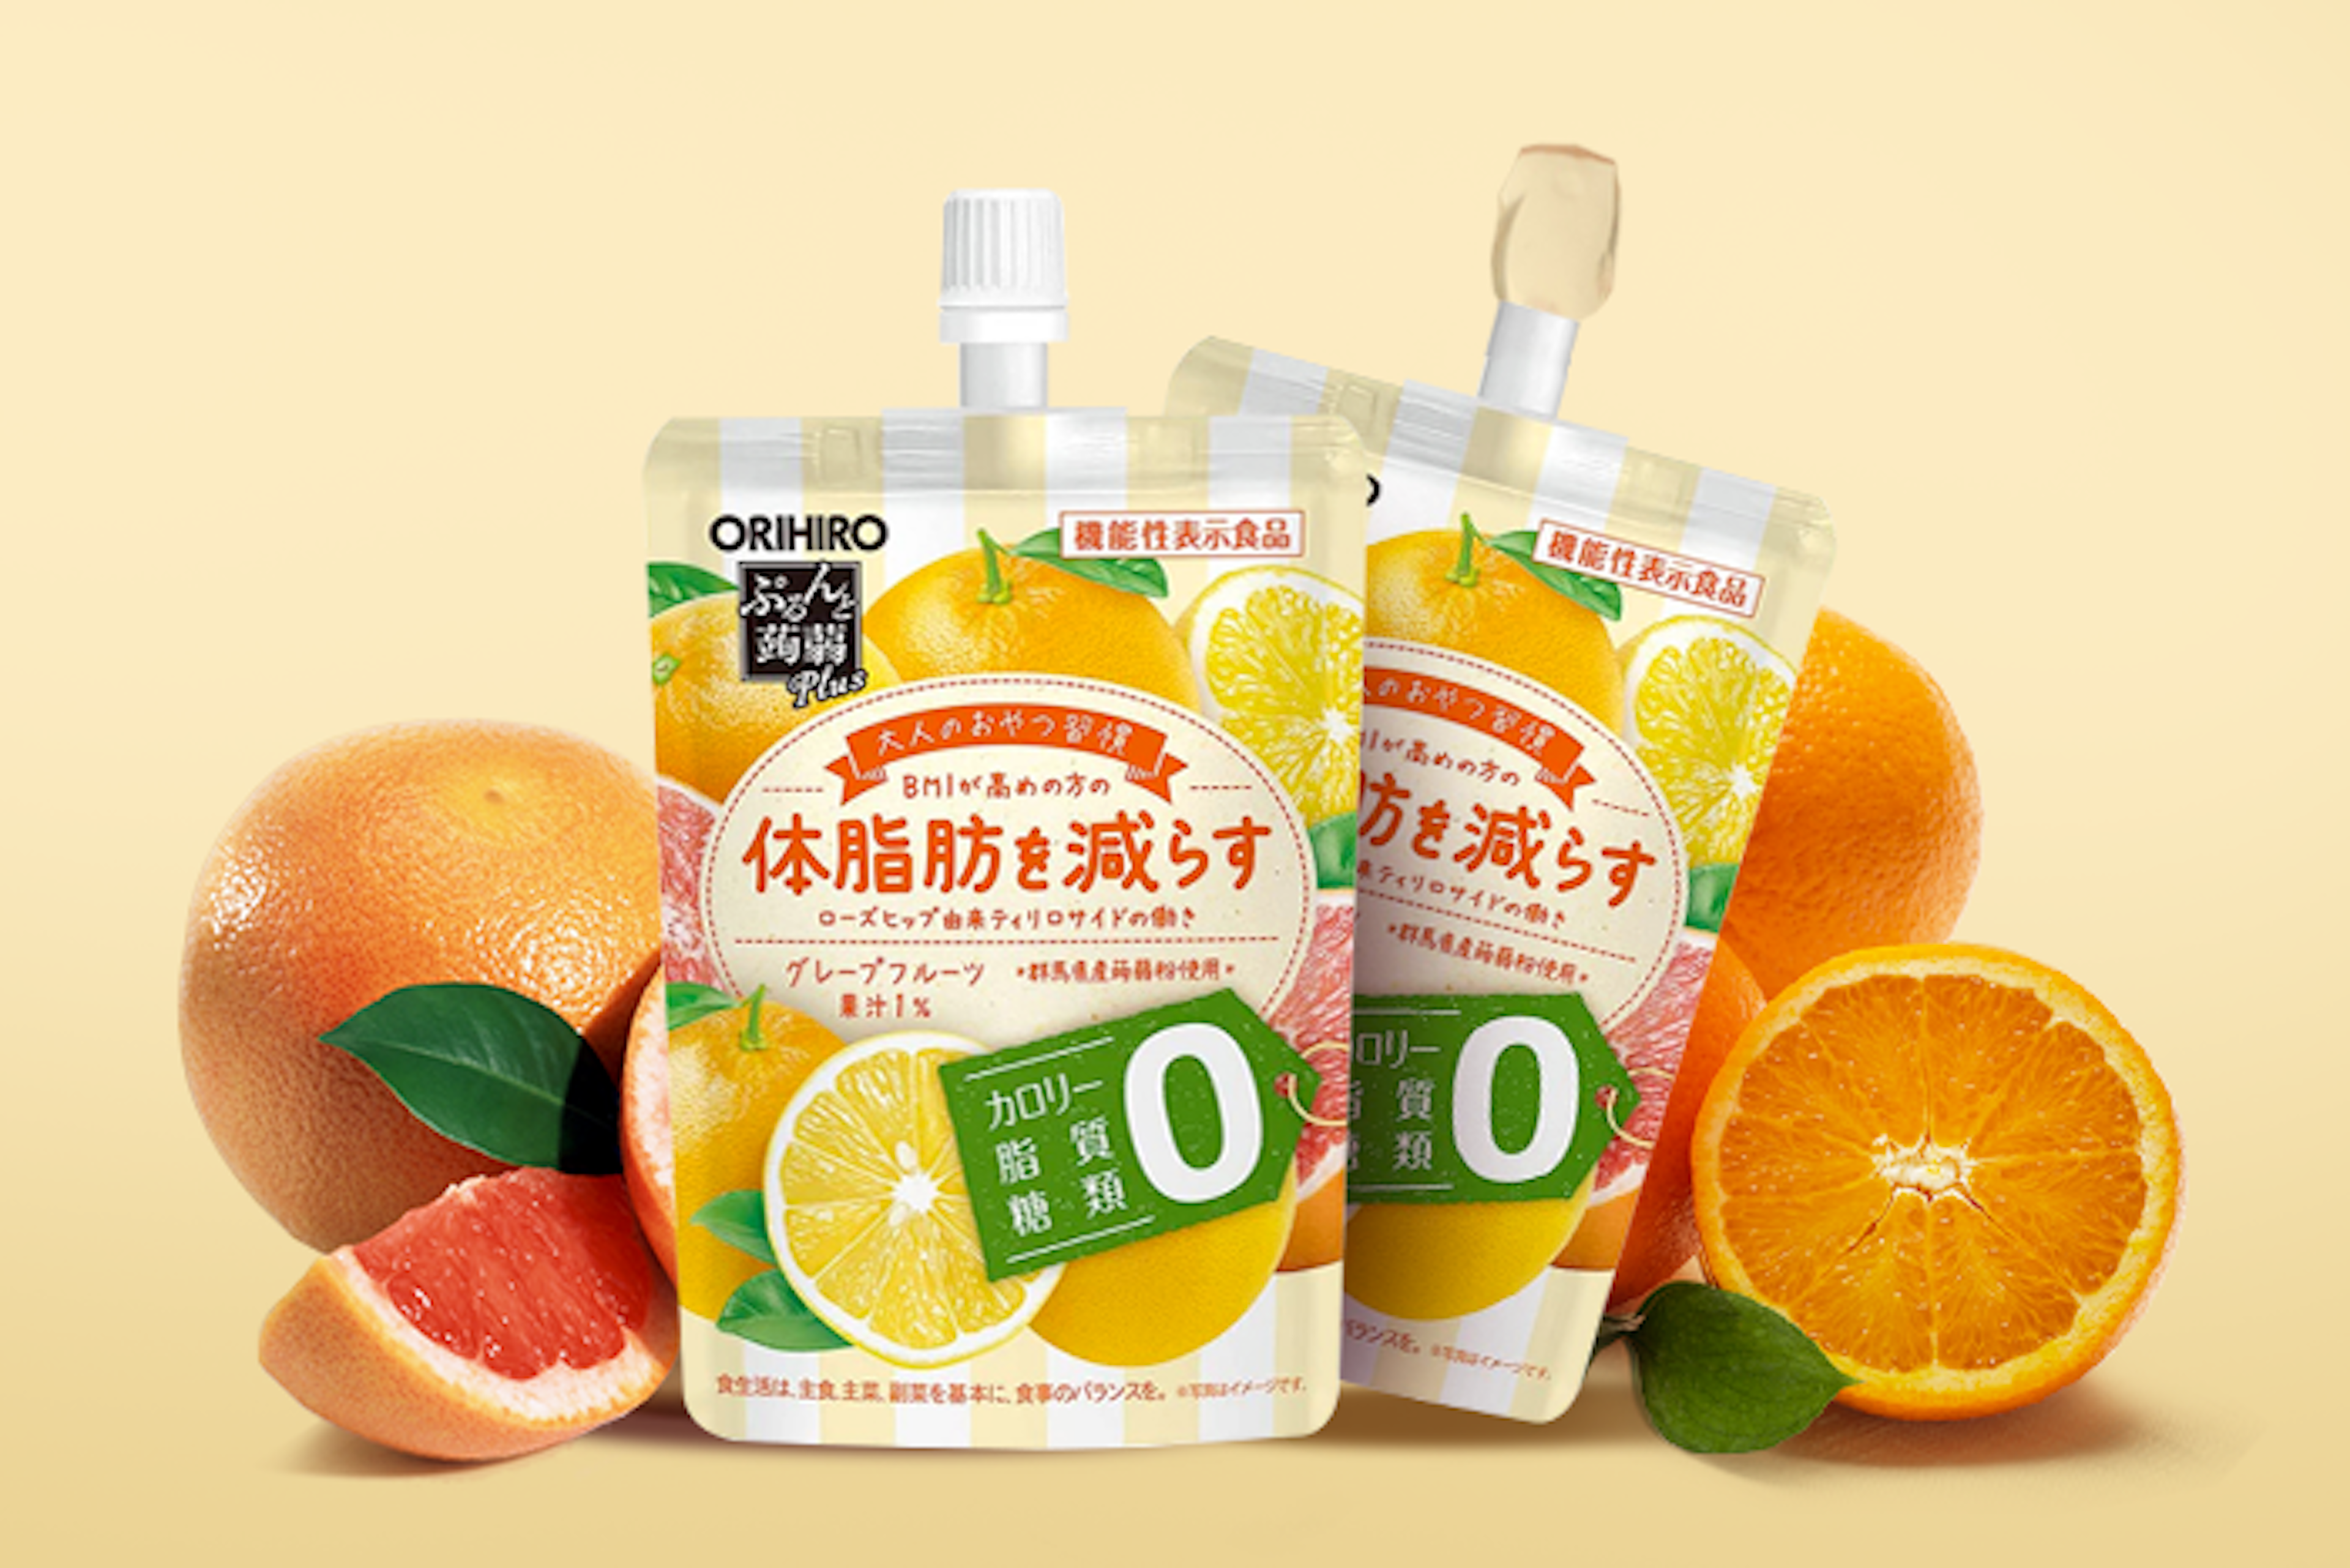 ORIHIRO Puru Puru Konjac Jelly Drink Grapefruit Geschmack 130g - Kalorienfreier, gesunder Snack